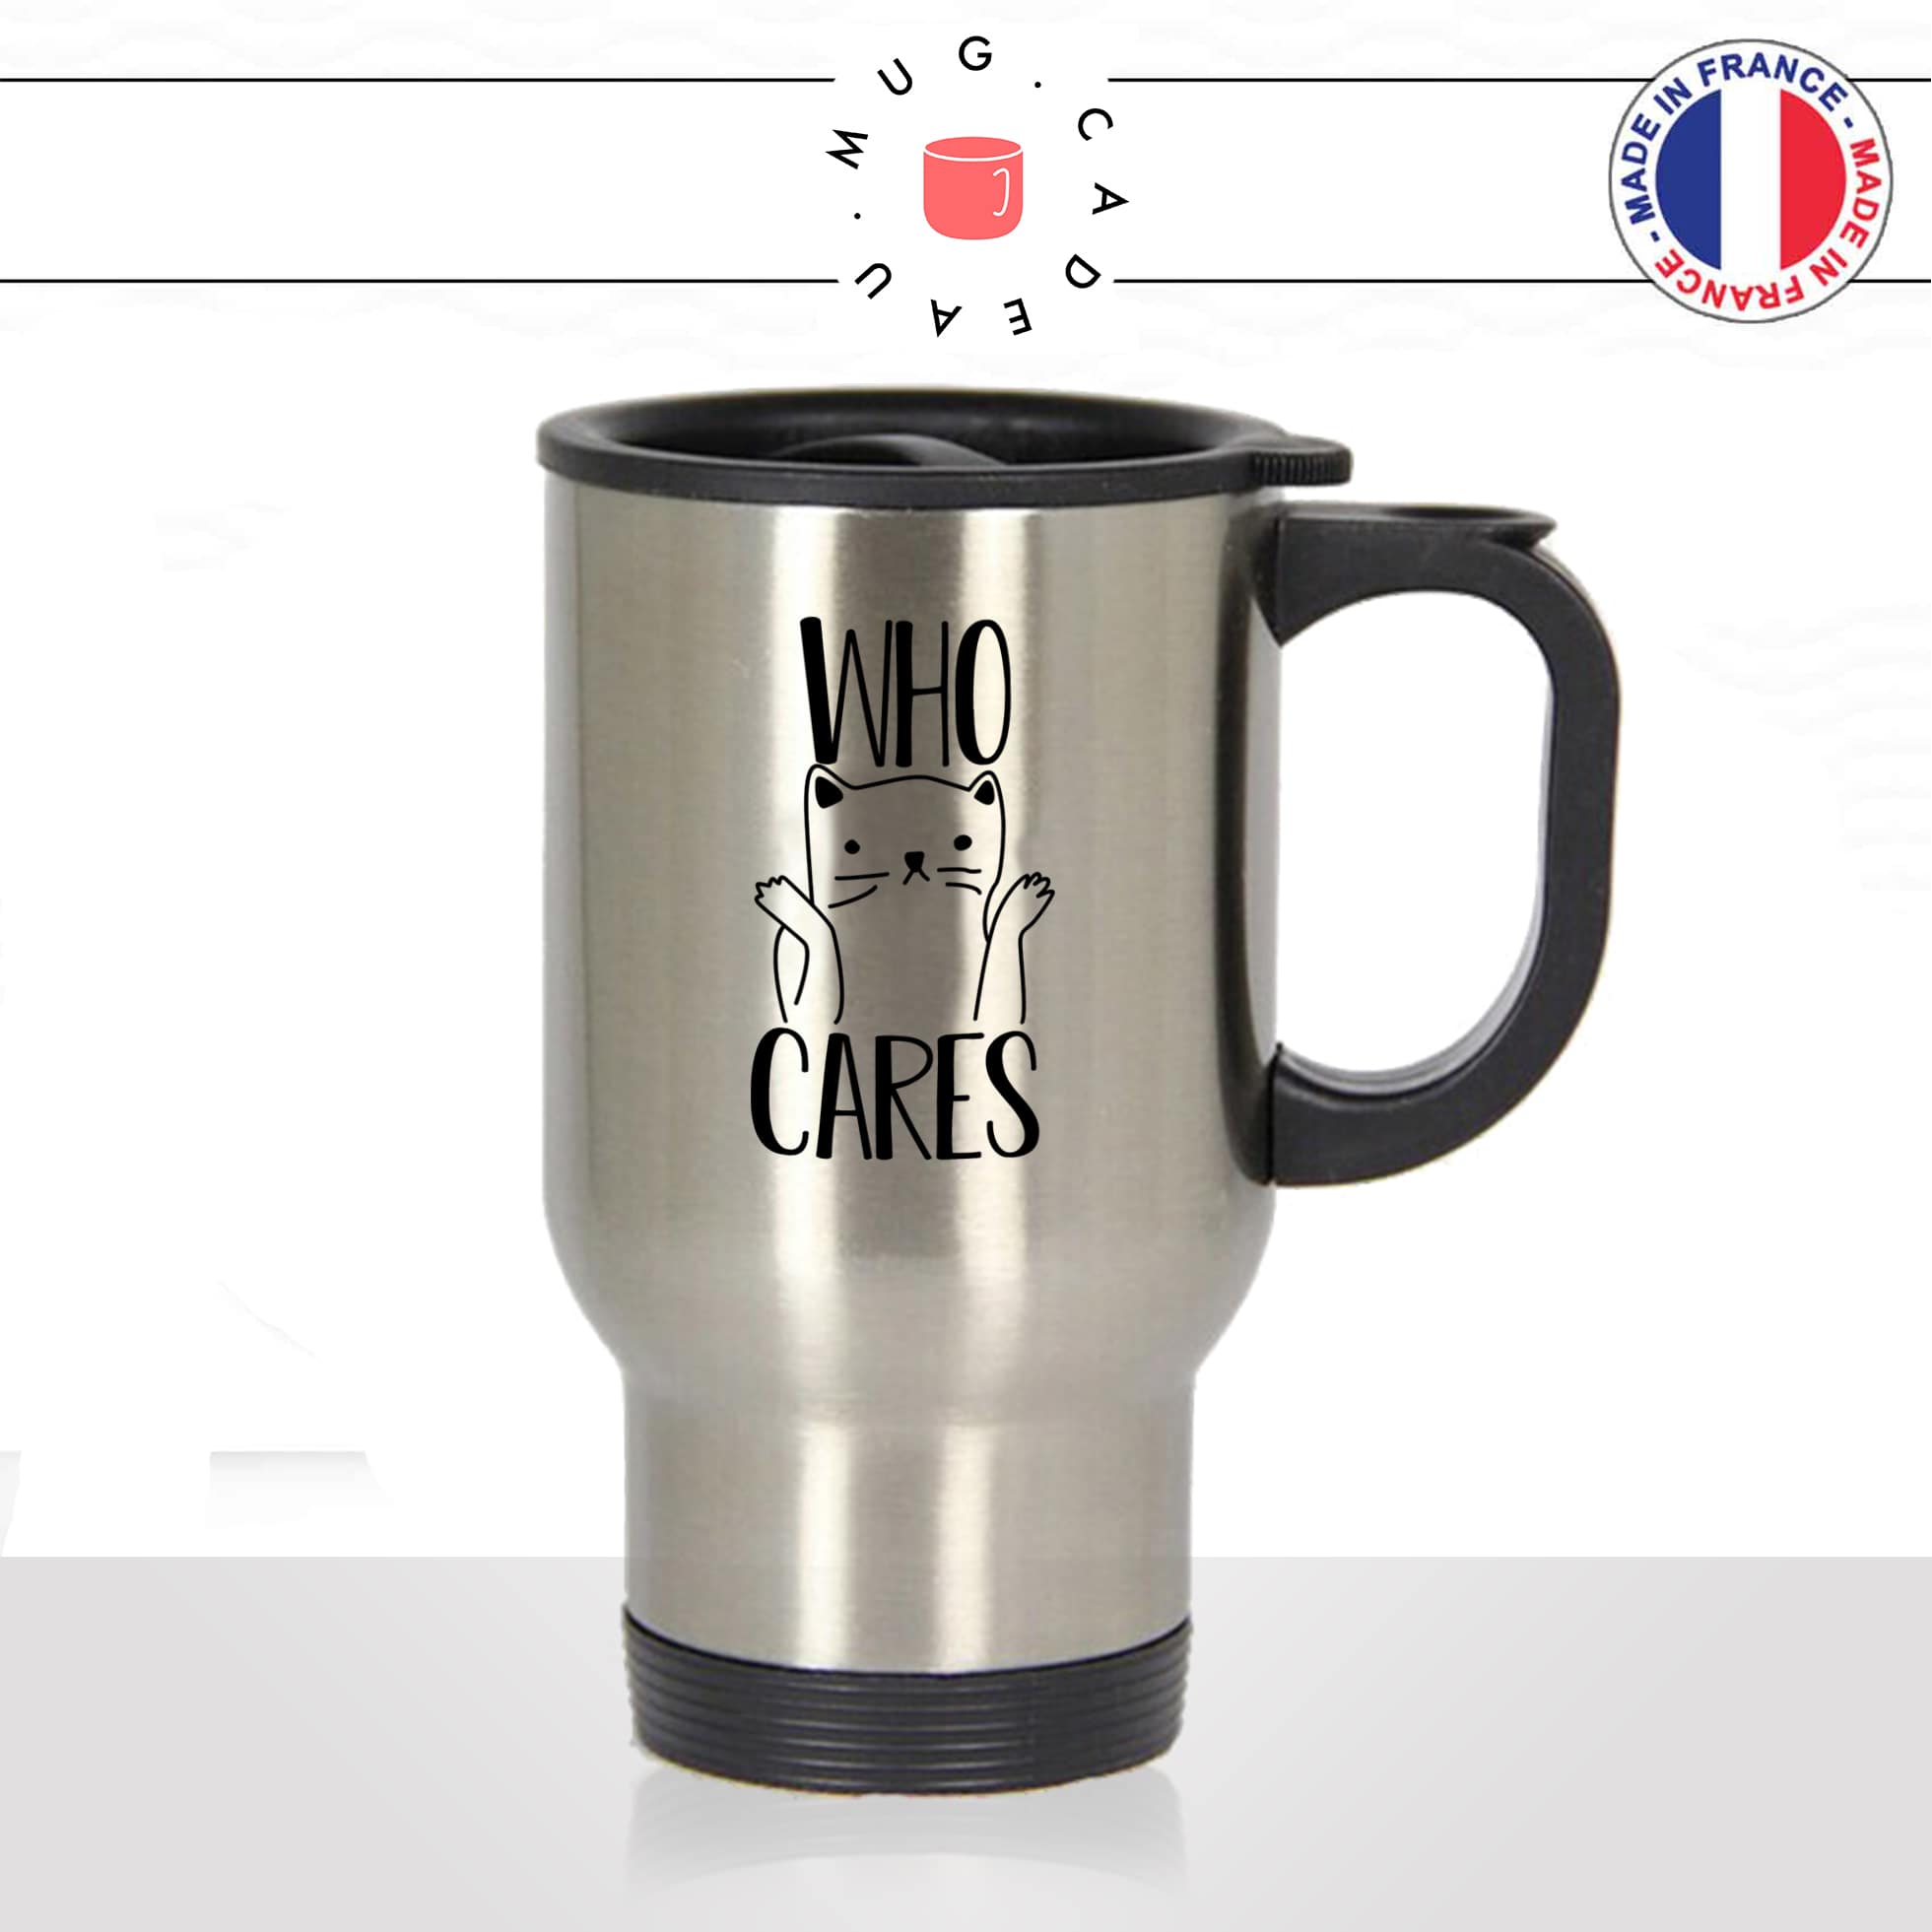 mug-tasse-thermos-de-voyage-café-thé-boisson-animal-animaux-chat-chaton-who-cares-on-sen-fou-drole-idée-cadeau-original-fun2-min